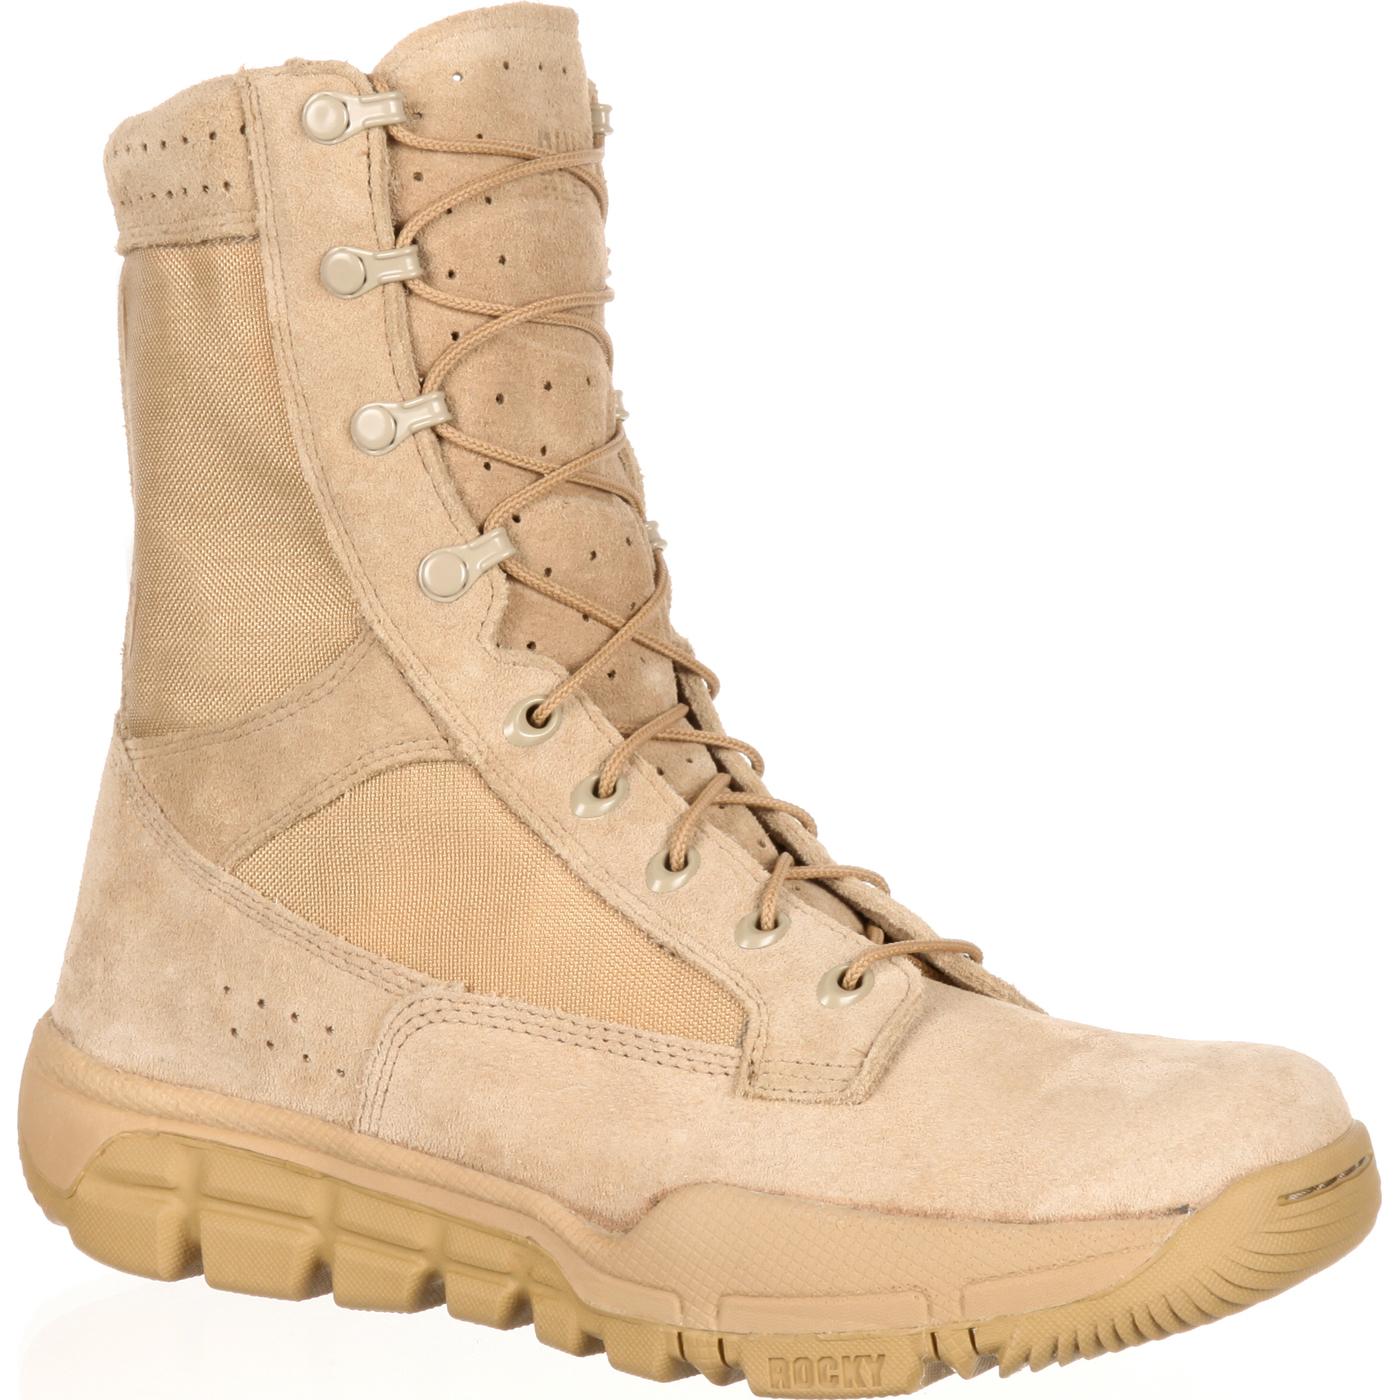 Rocky Lightweight Desert Tan Commercial Military Boots